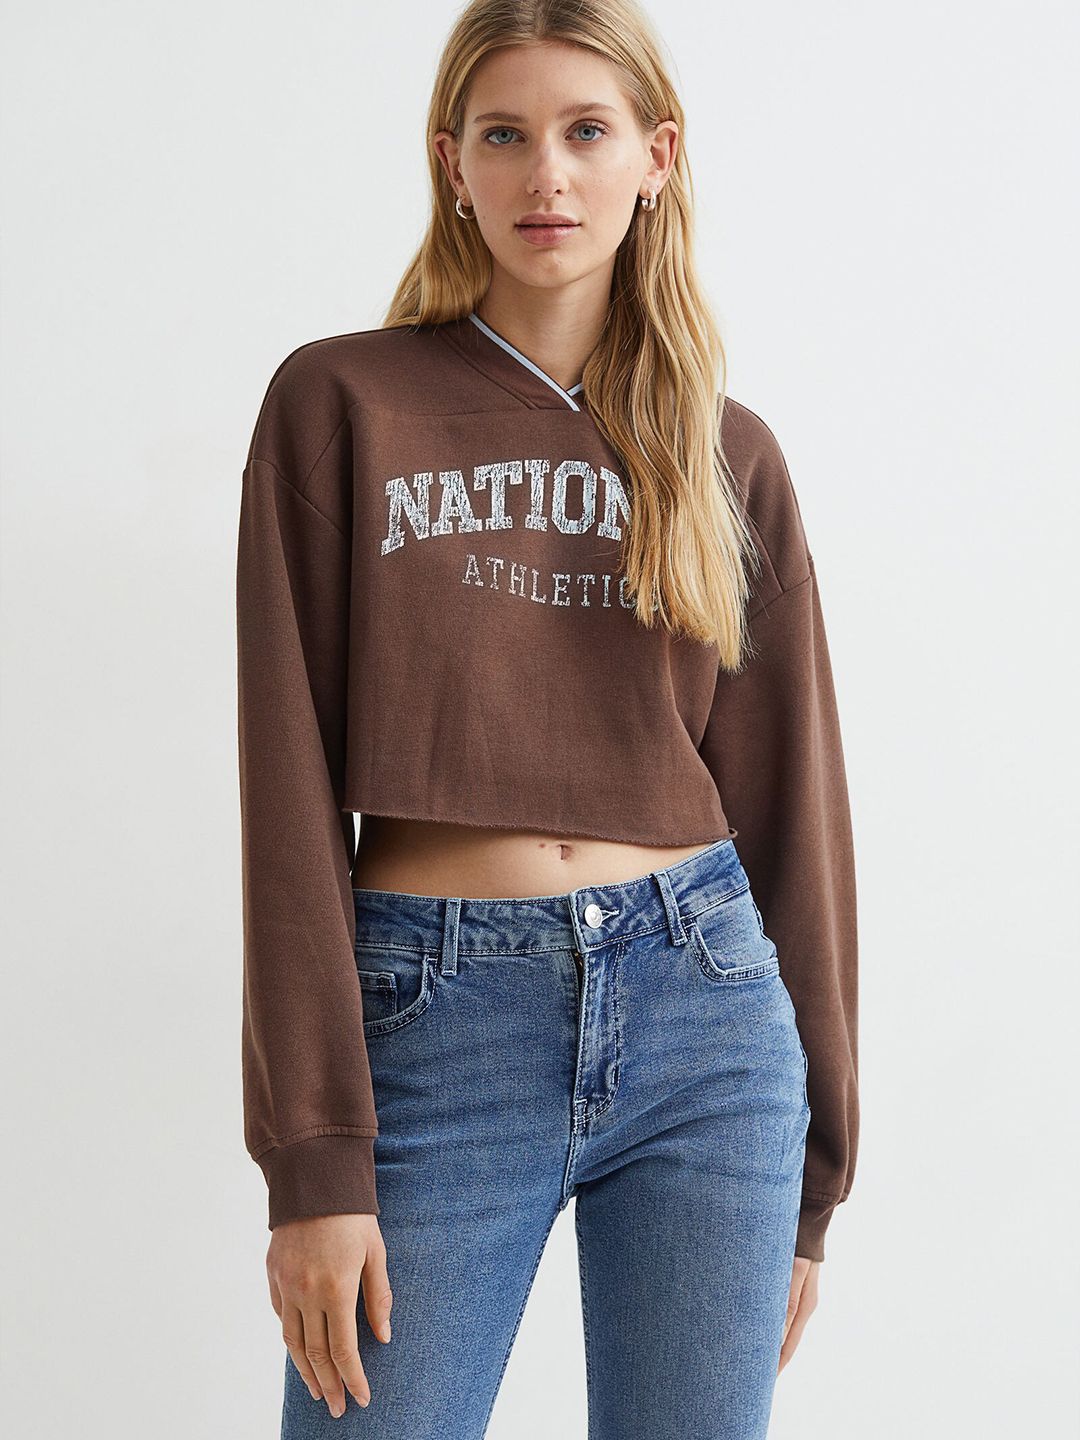 H&M Women Brown Cropped Sweatshirt Price in India